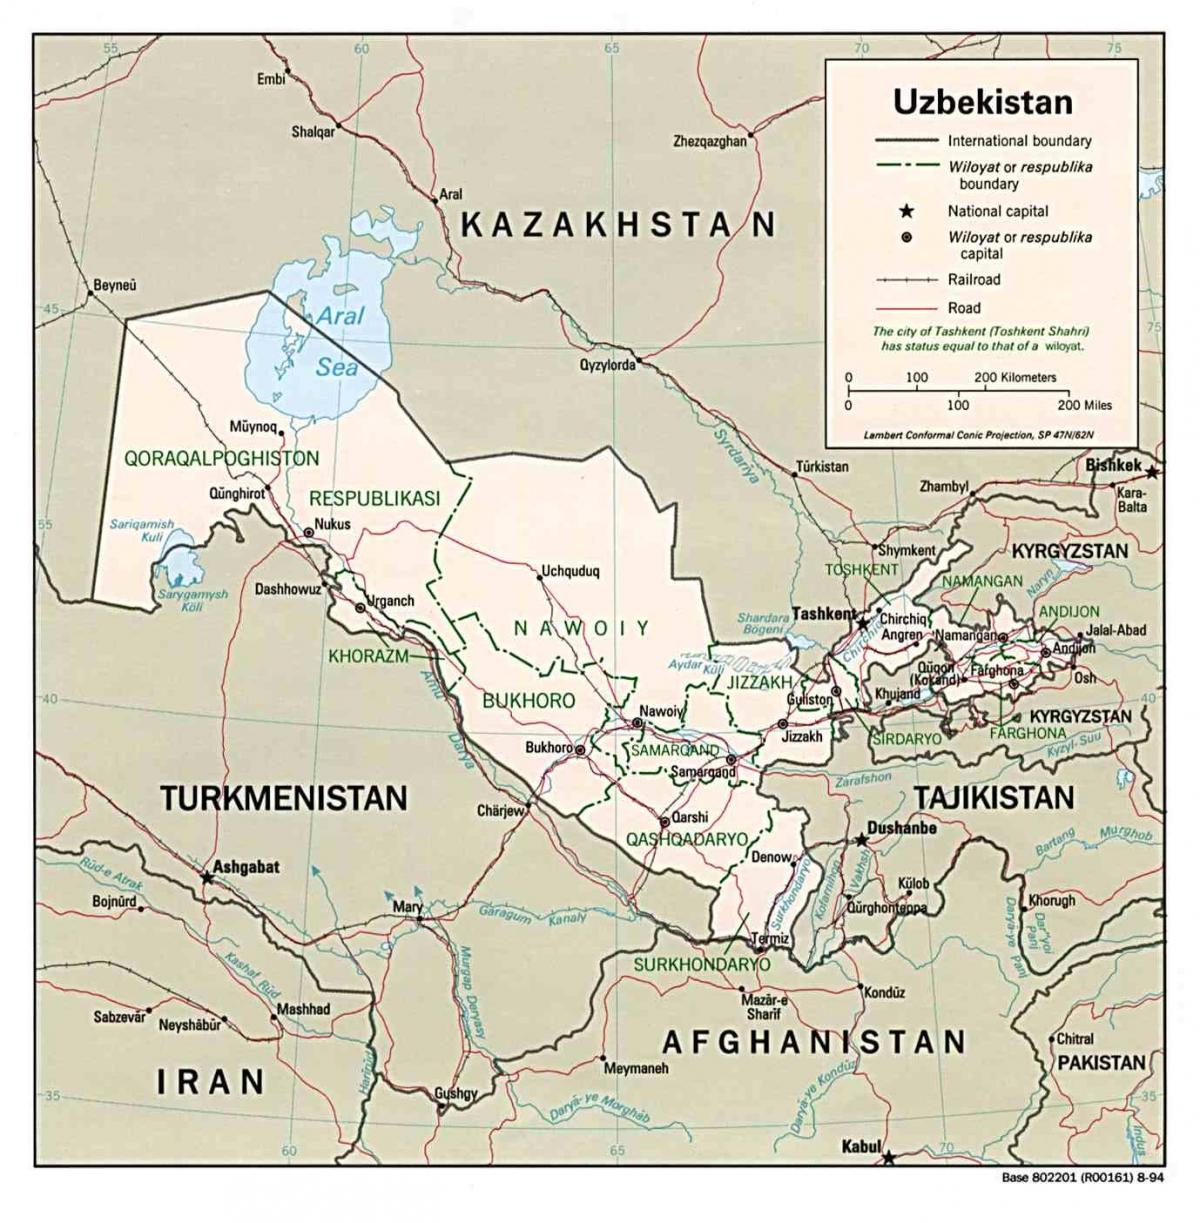 zemljevid Uzbekistan okoliških državah